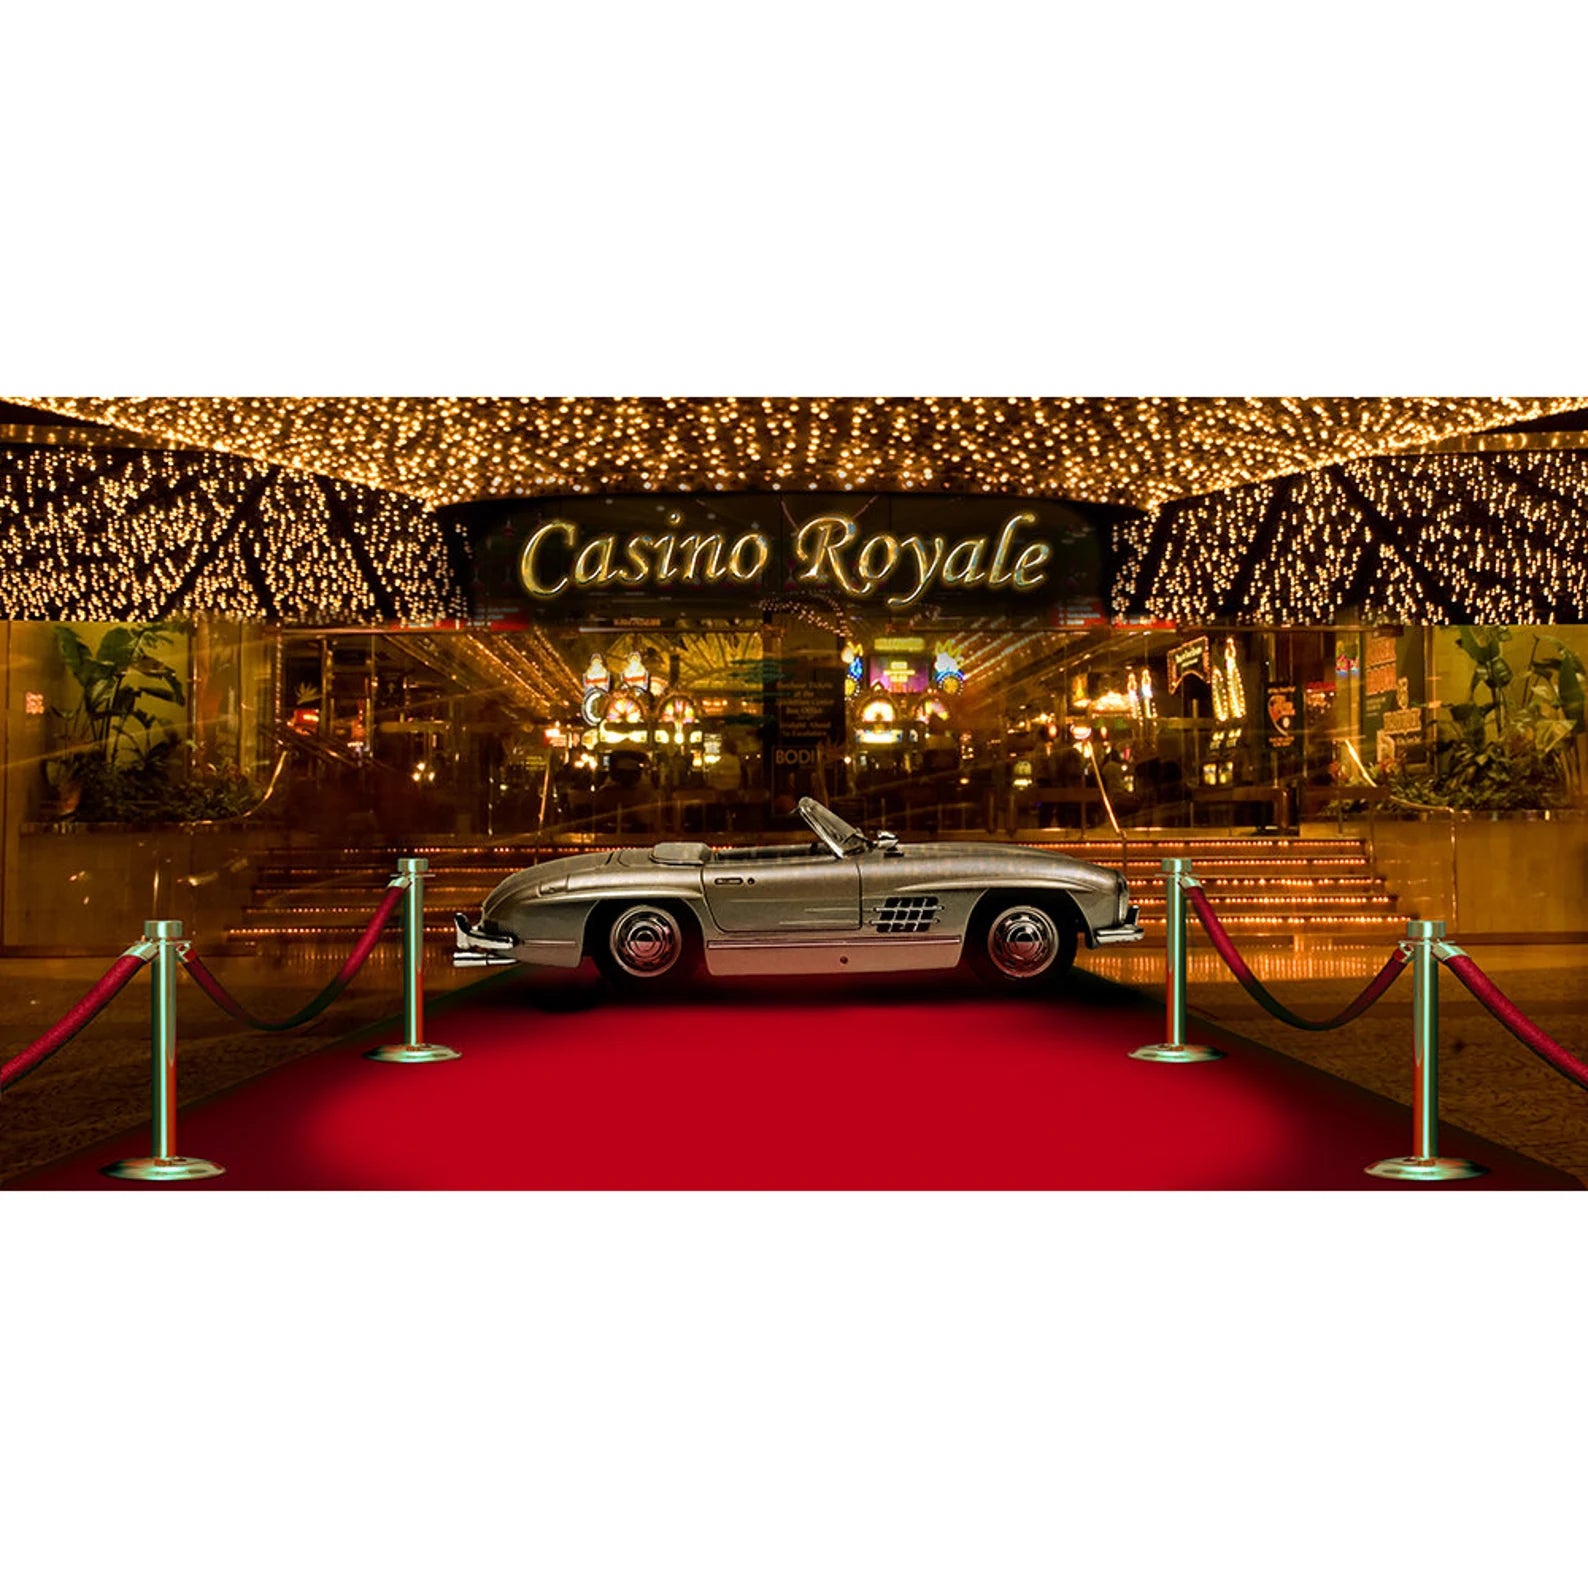 Casino Royale 007, James Bond Photo Backdrop - Pro 16  x 9  